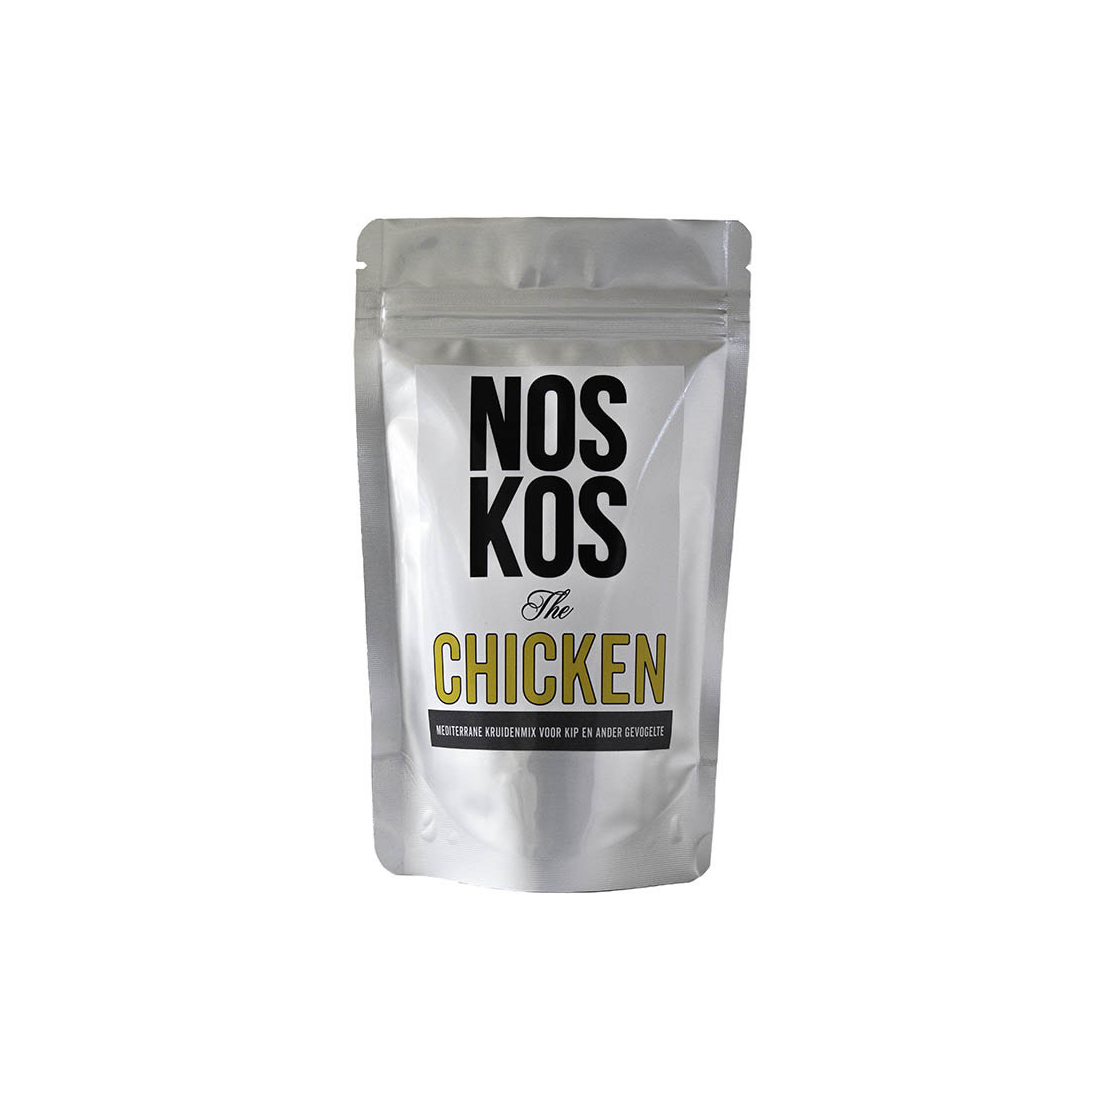 noskos-the-chicken-1-1